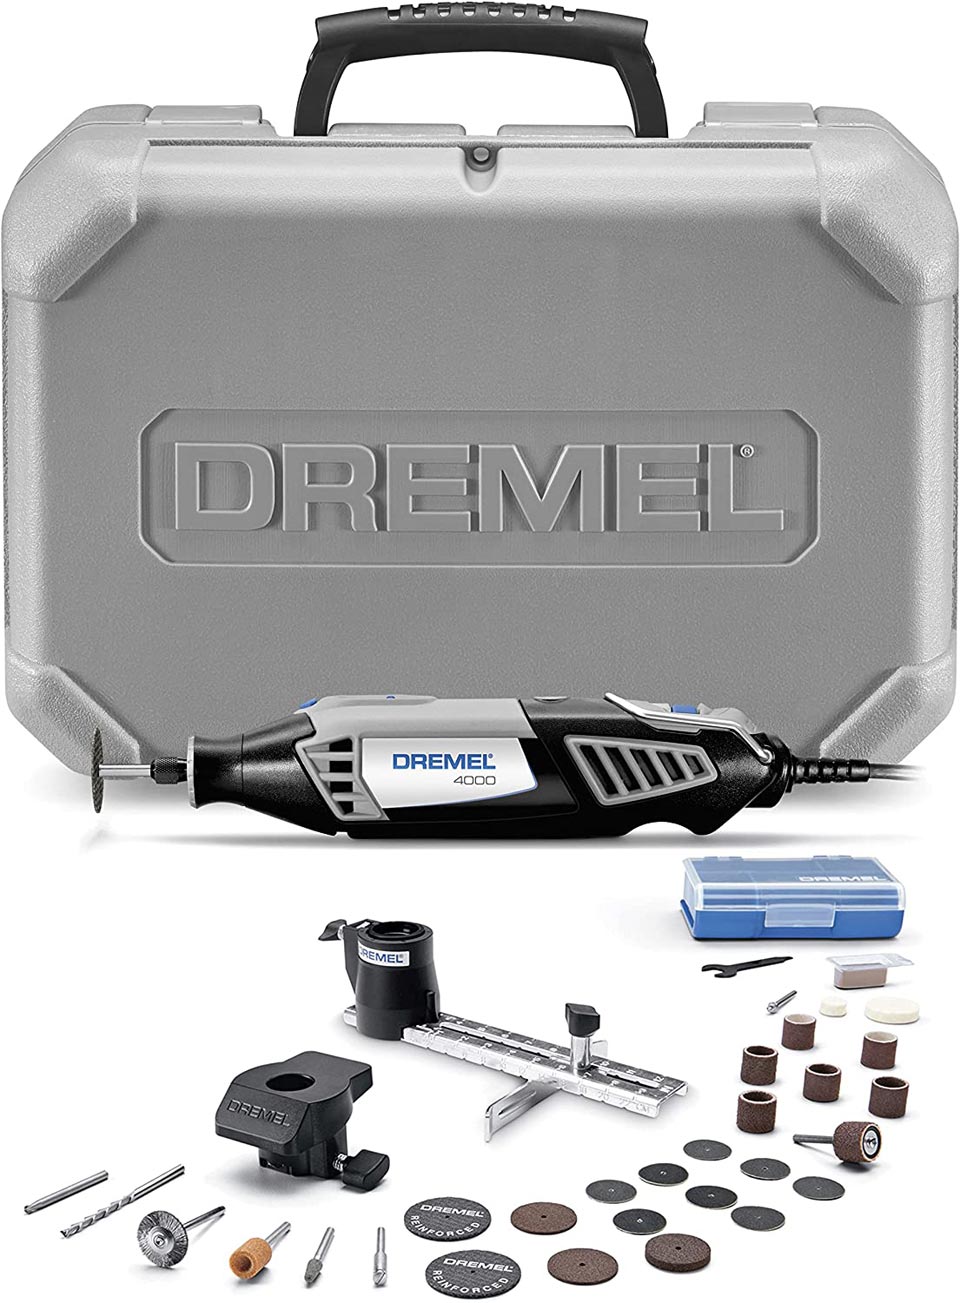 Dremel High Performance Rotary Tool Kit